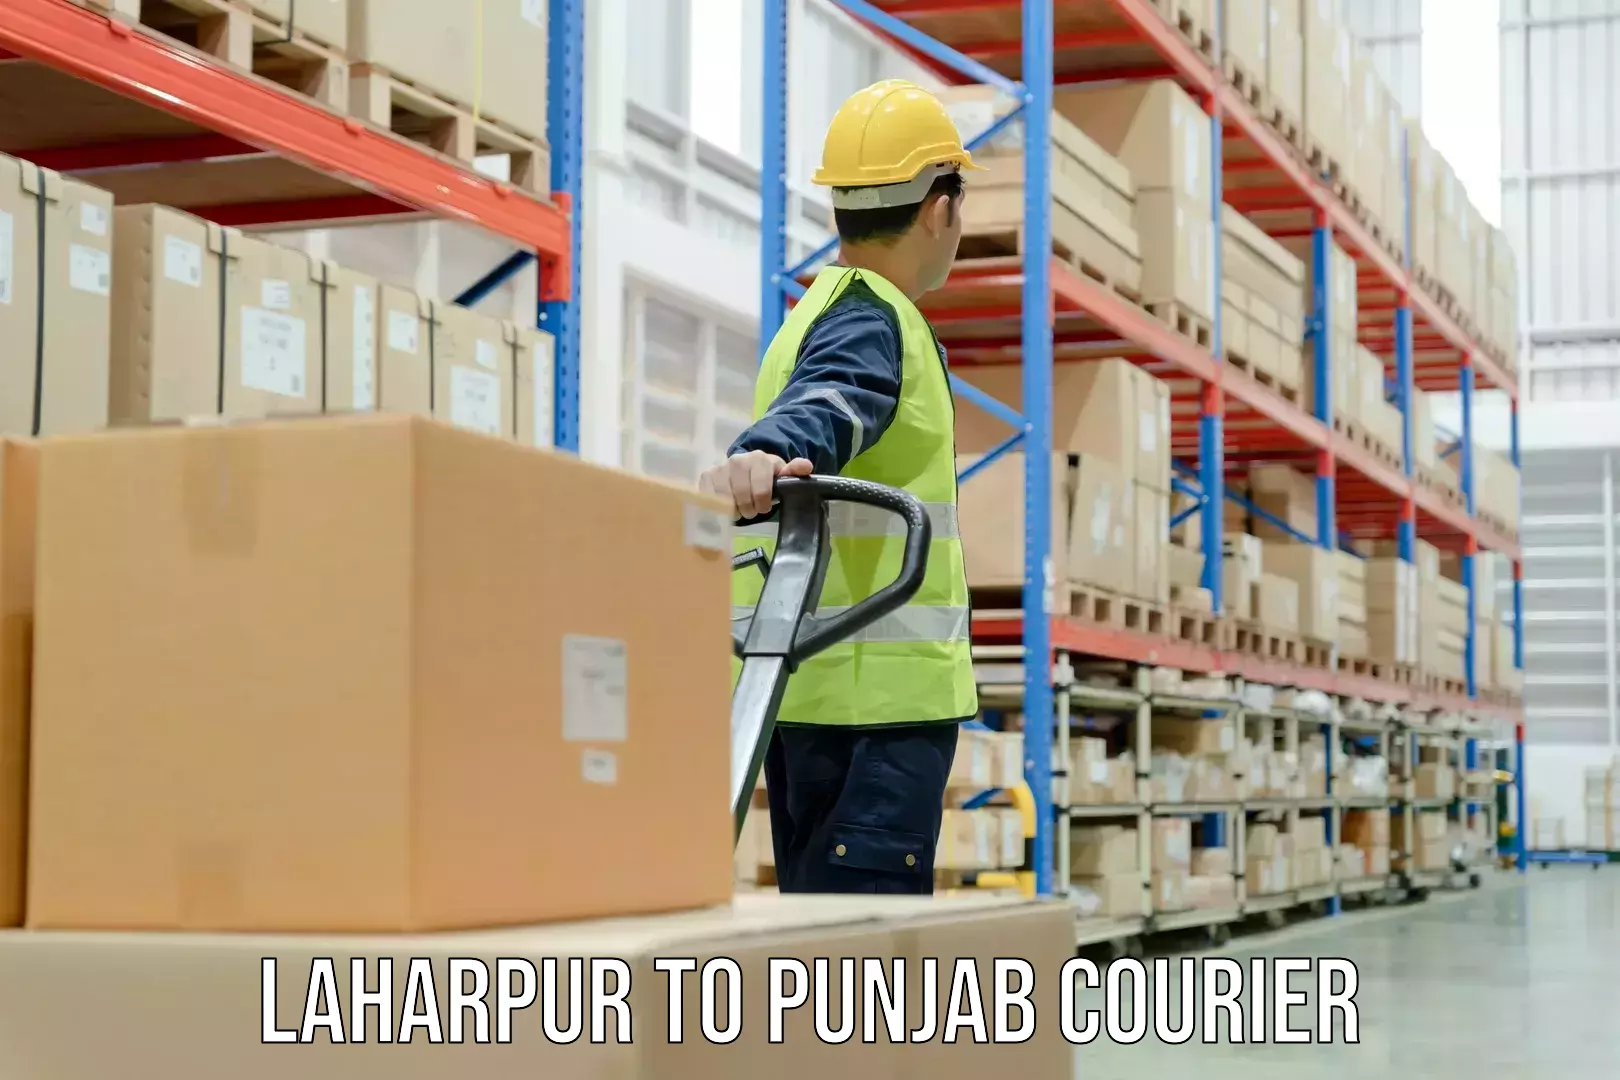 Quick dispatch service Laharpur to Punjab